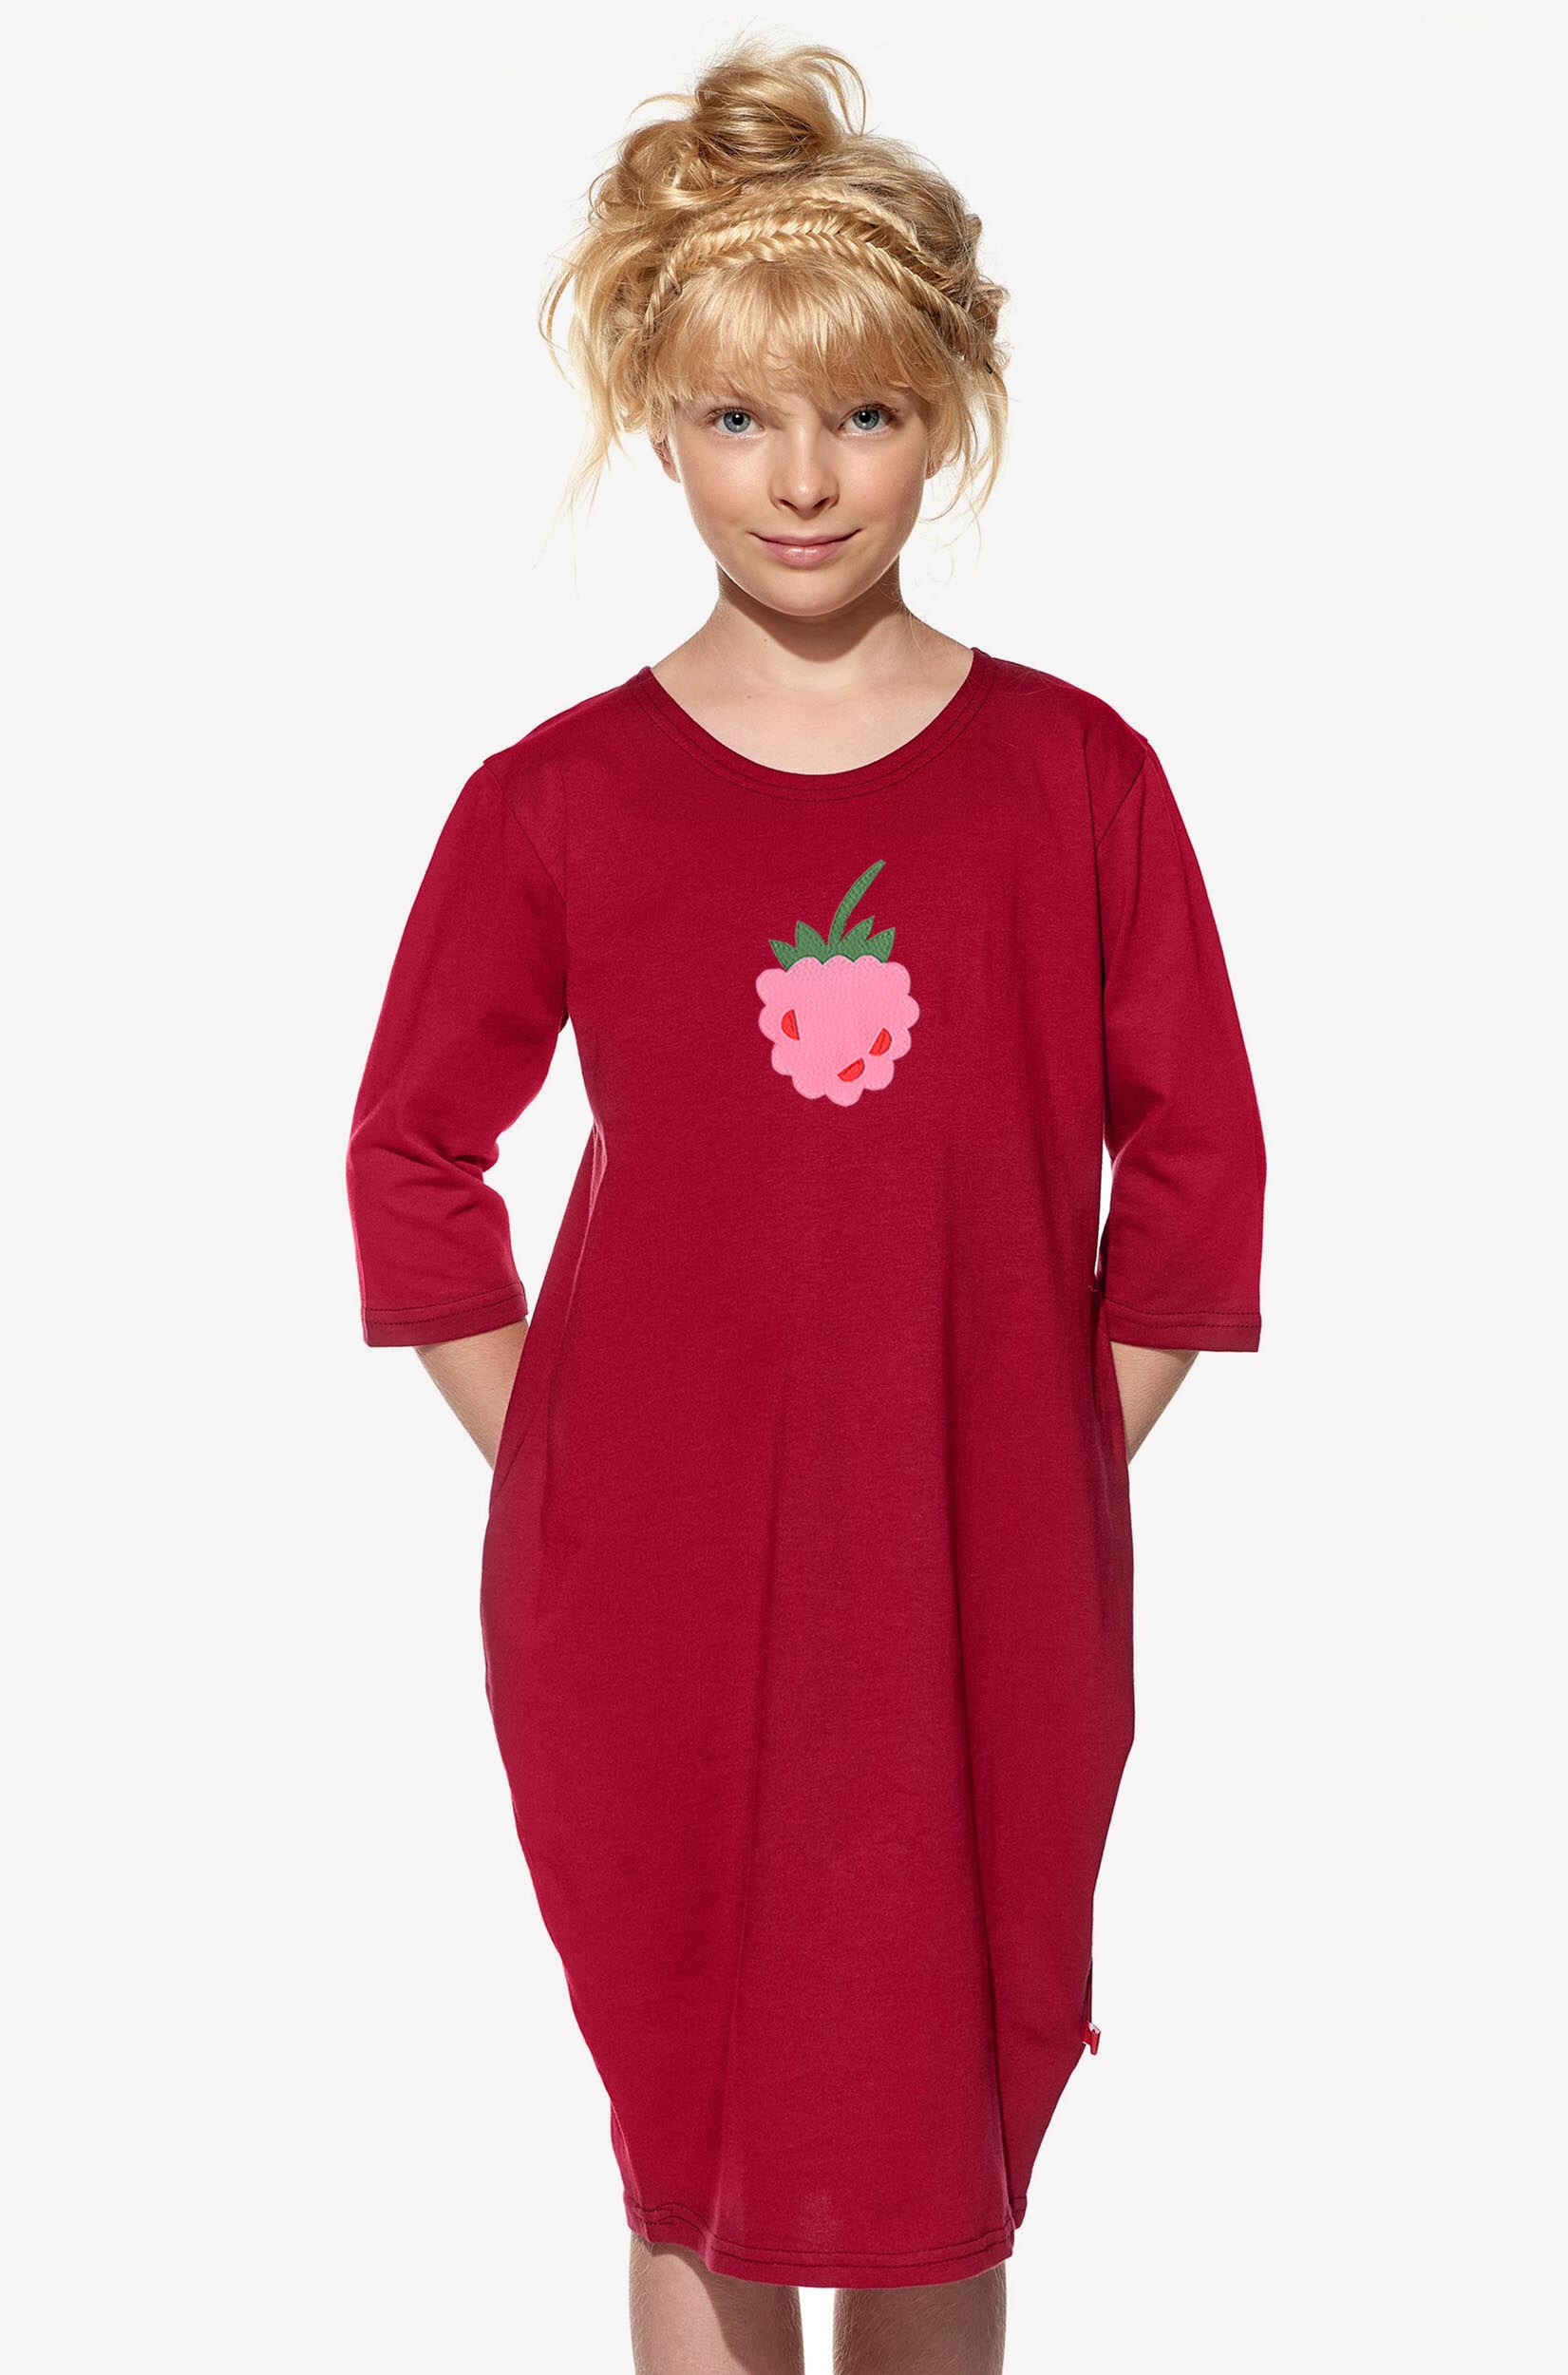 Dresses with raspberry